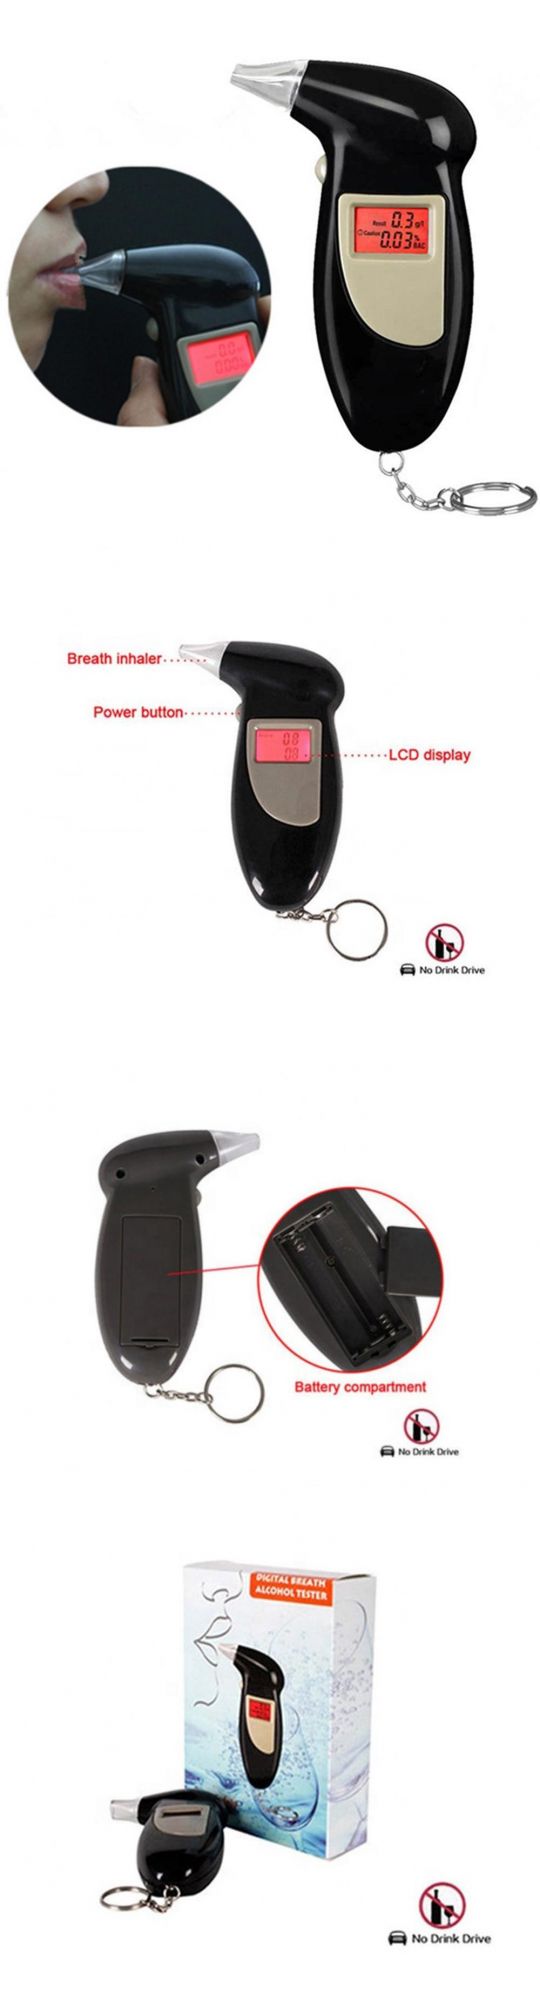 Breath Alcohol Tester Mini Alcohol Meter Tester Breathalyzer Alcohol Tester LED Digital Breath Alcohol Tester Portable